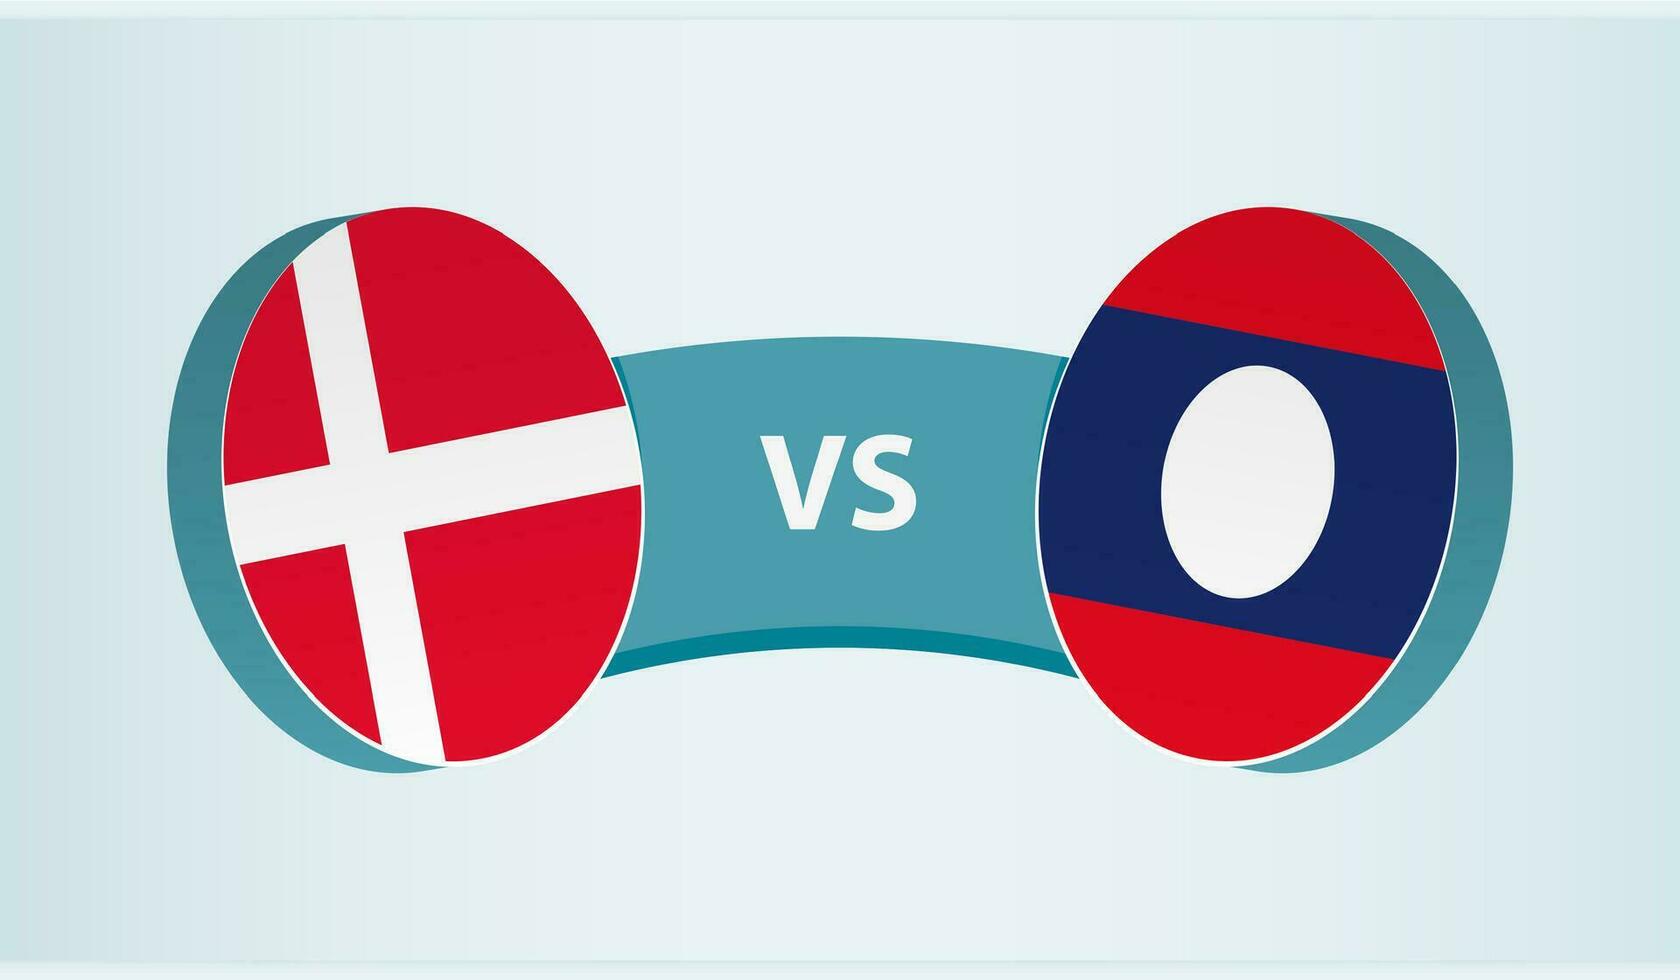 Denmark versus Laos, team sports competition concept. vector